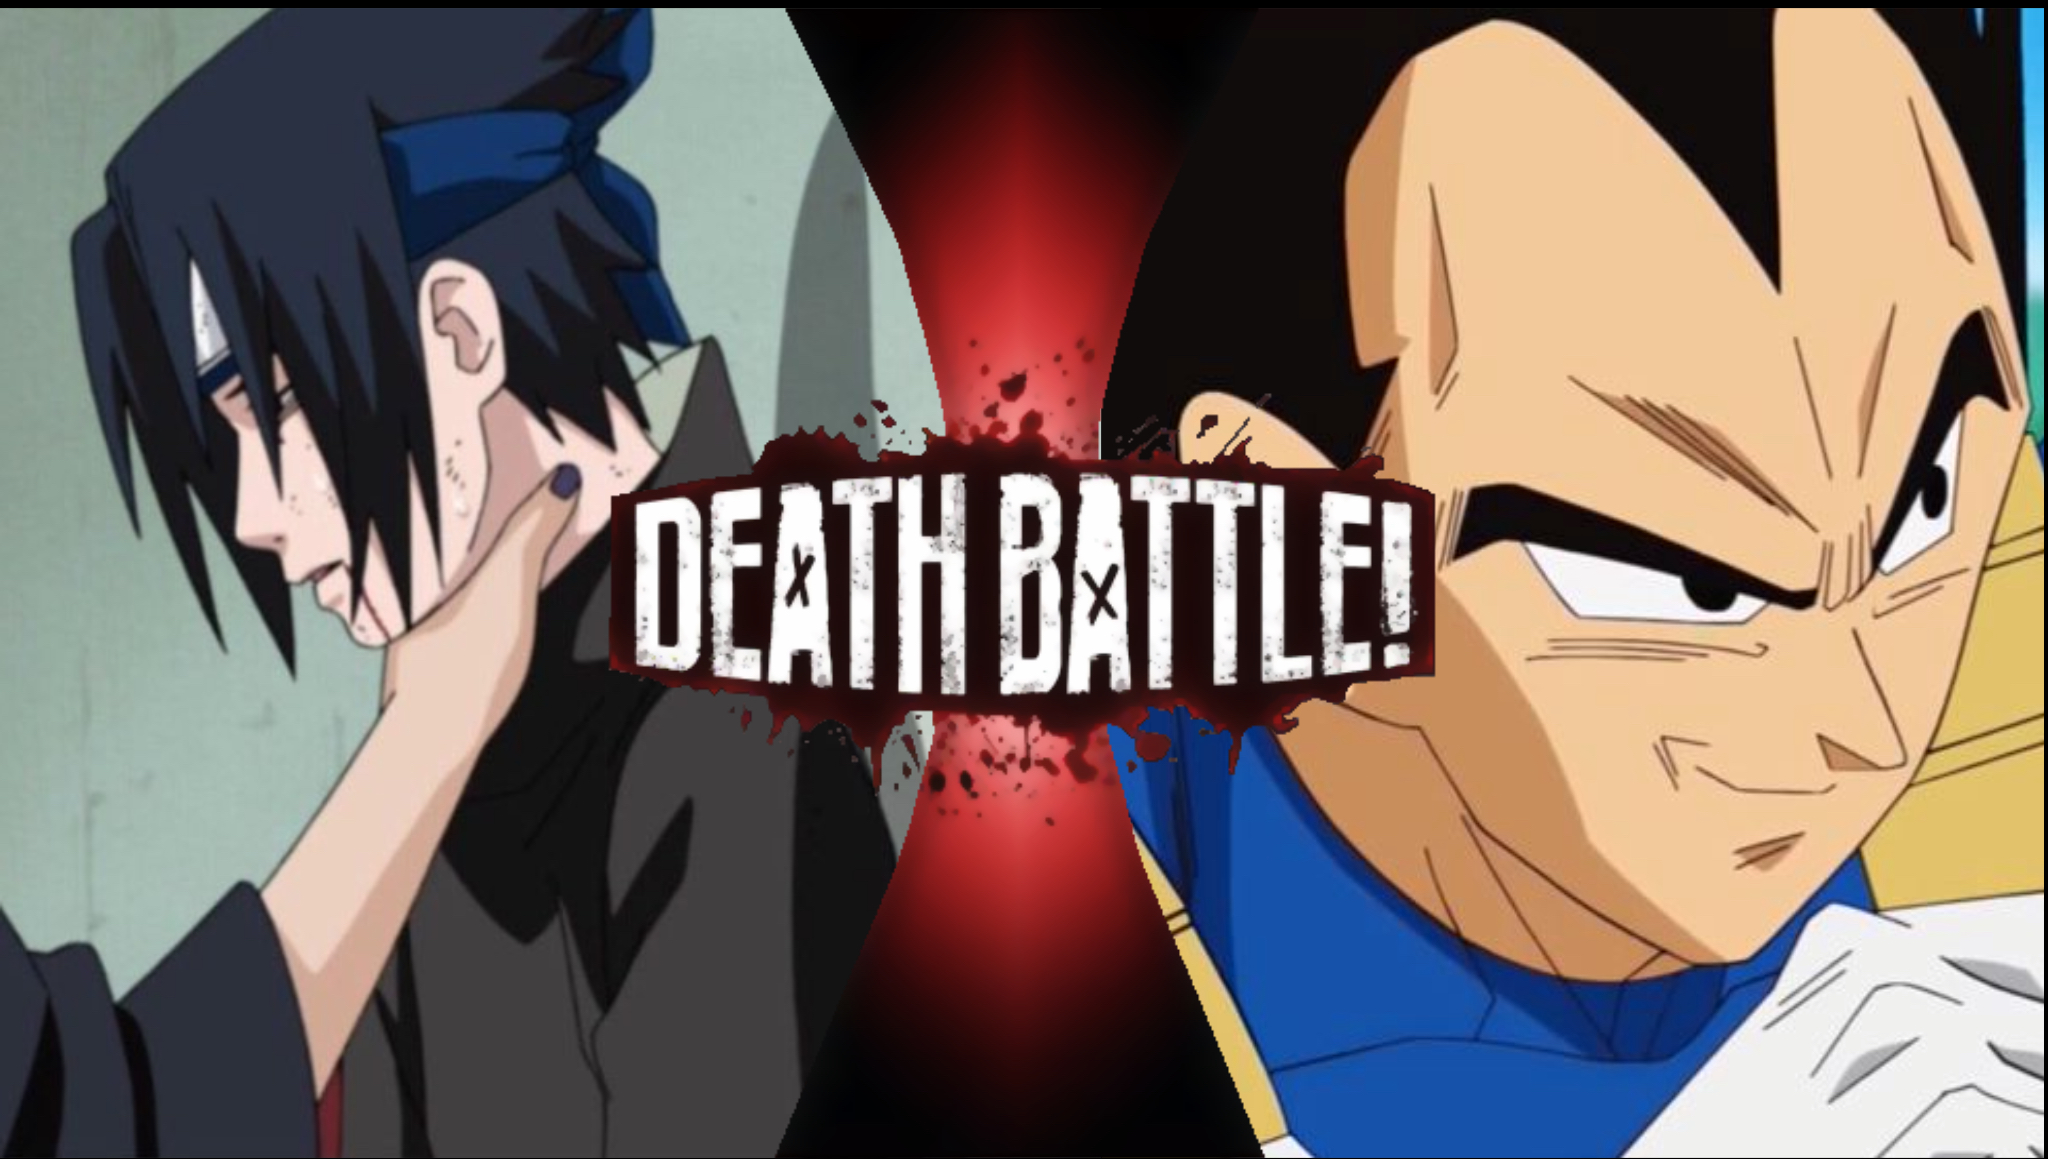 GOKU and VEGETA vs NARUTO and SASUKE! (Dragon Ball Super vs Naruto MOVIE)